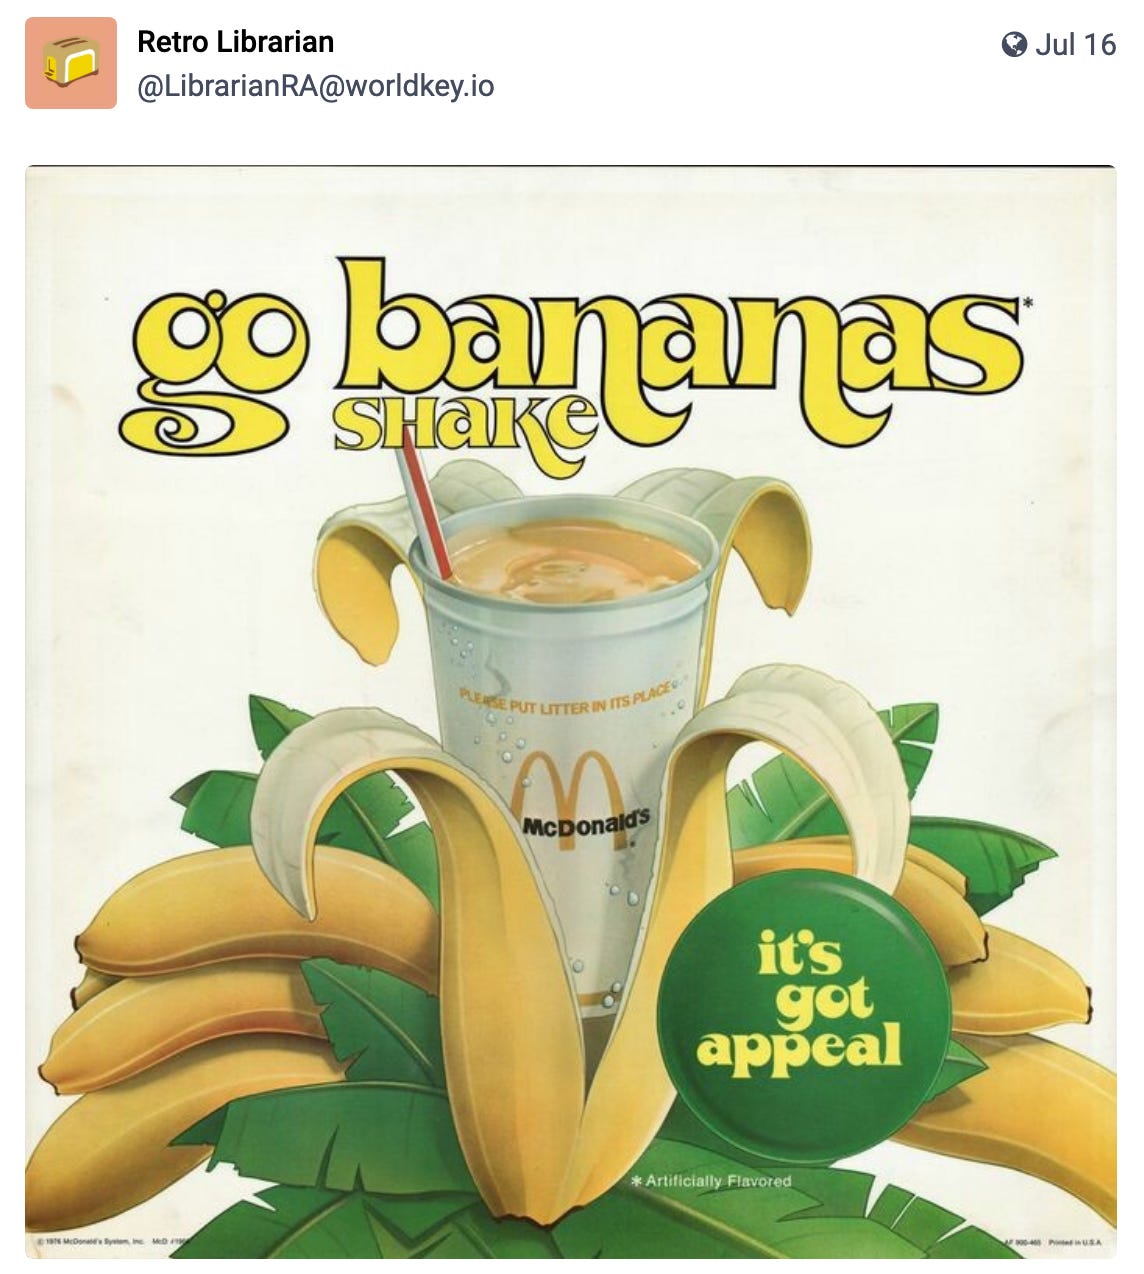 go bananas shake